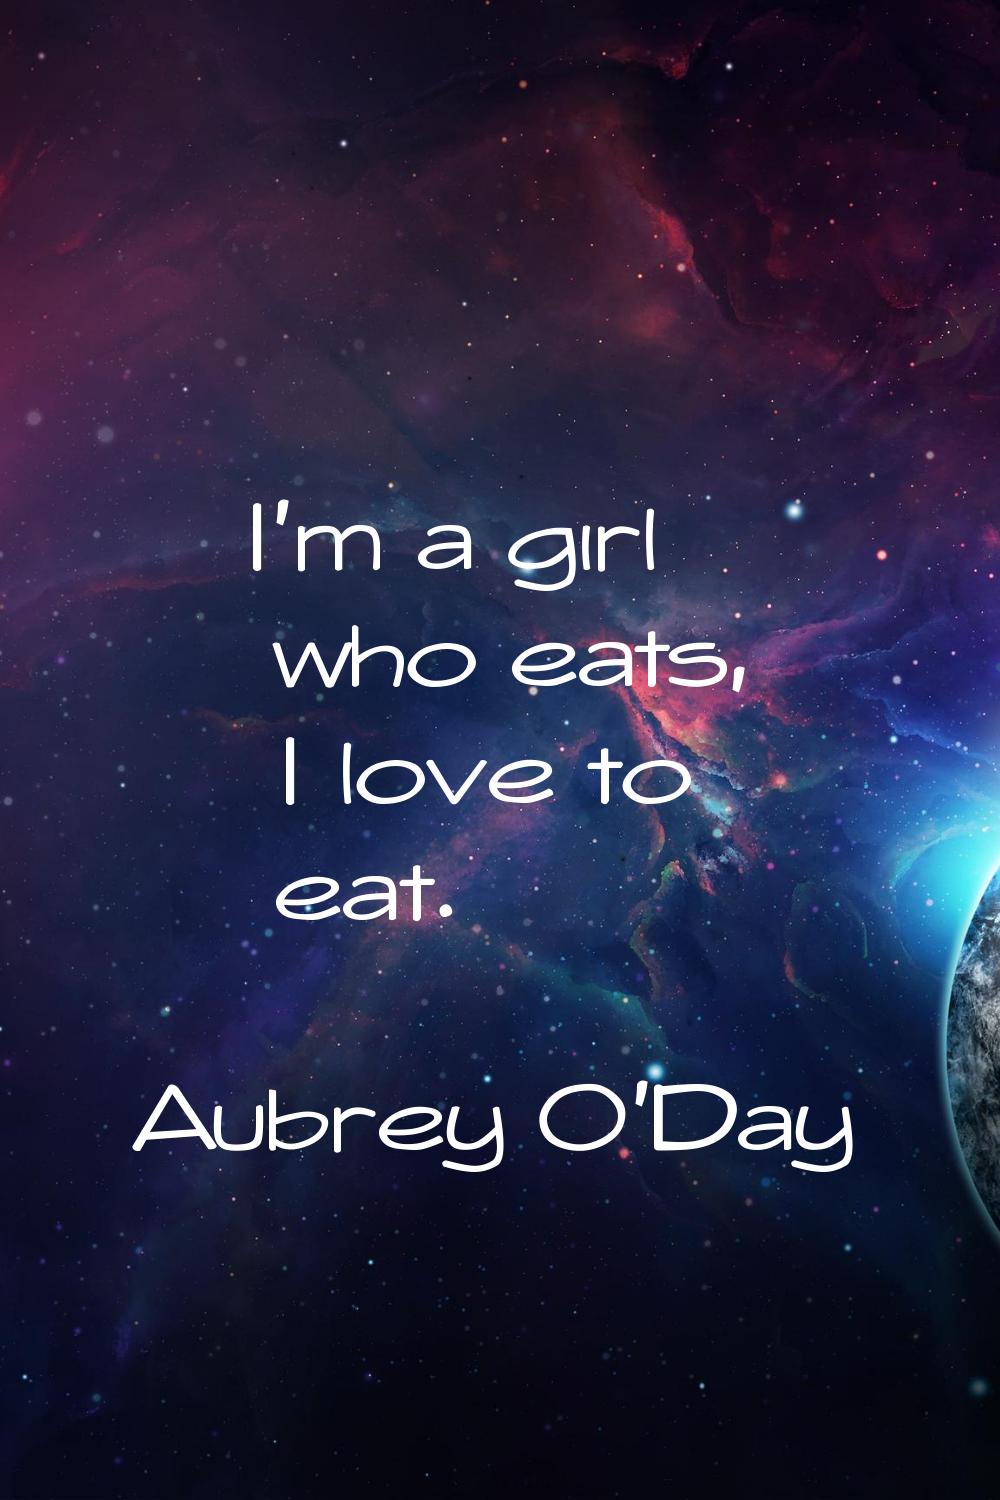 I'm a girl who eats, I love to eat.